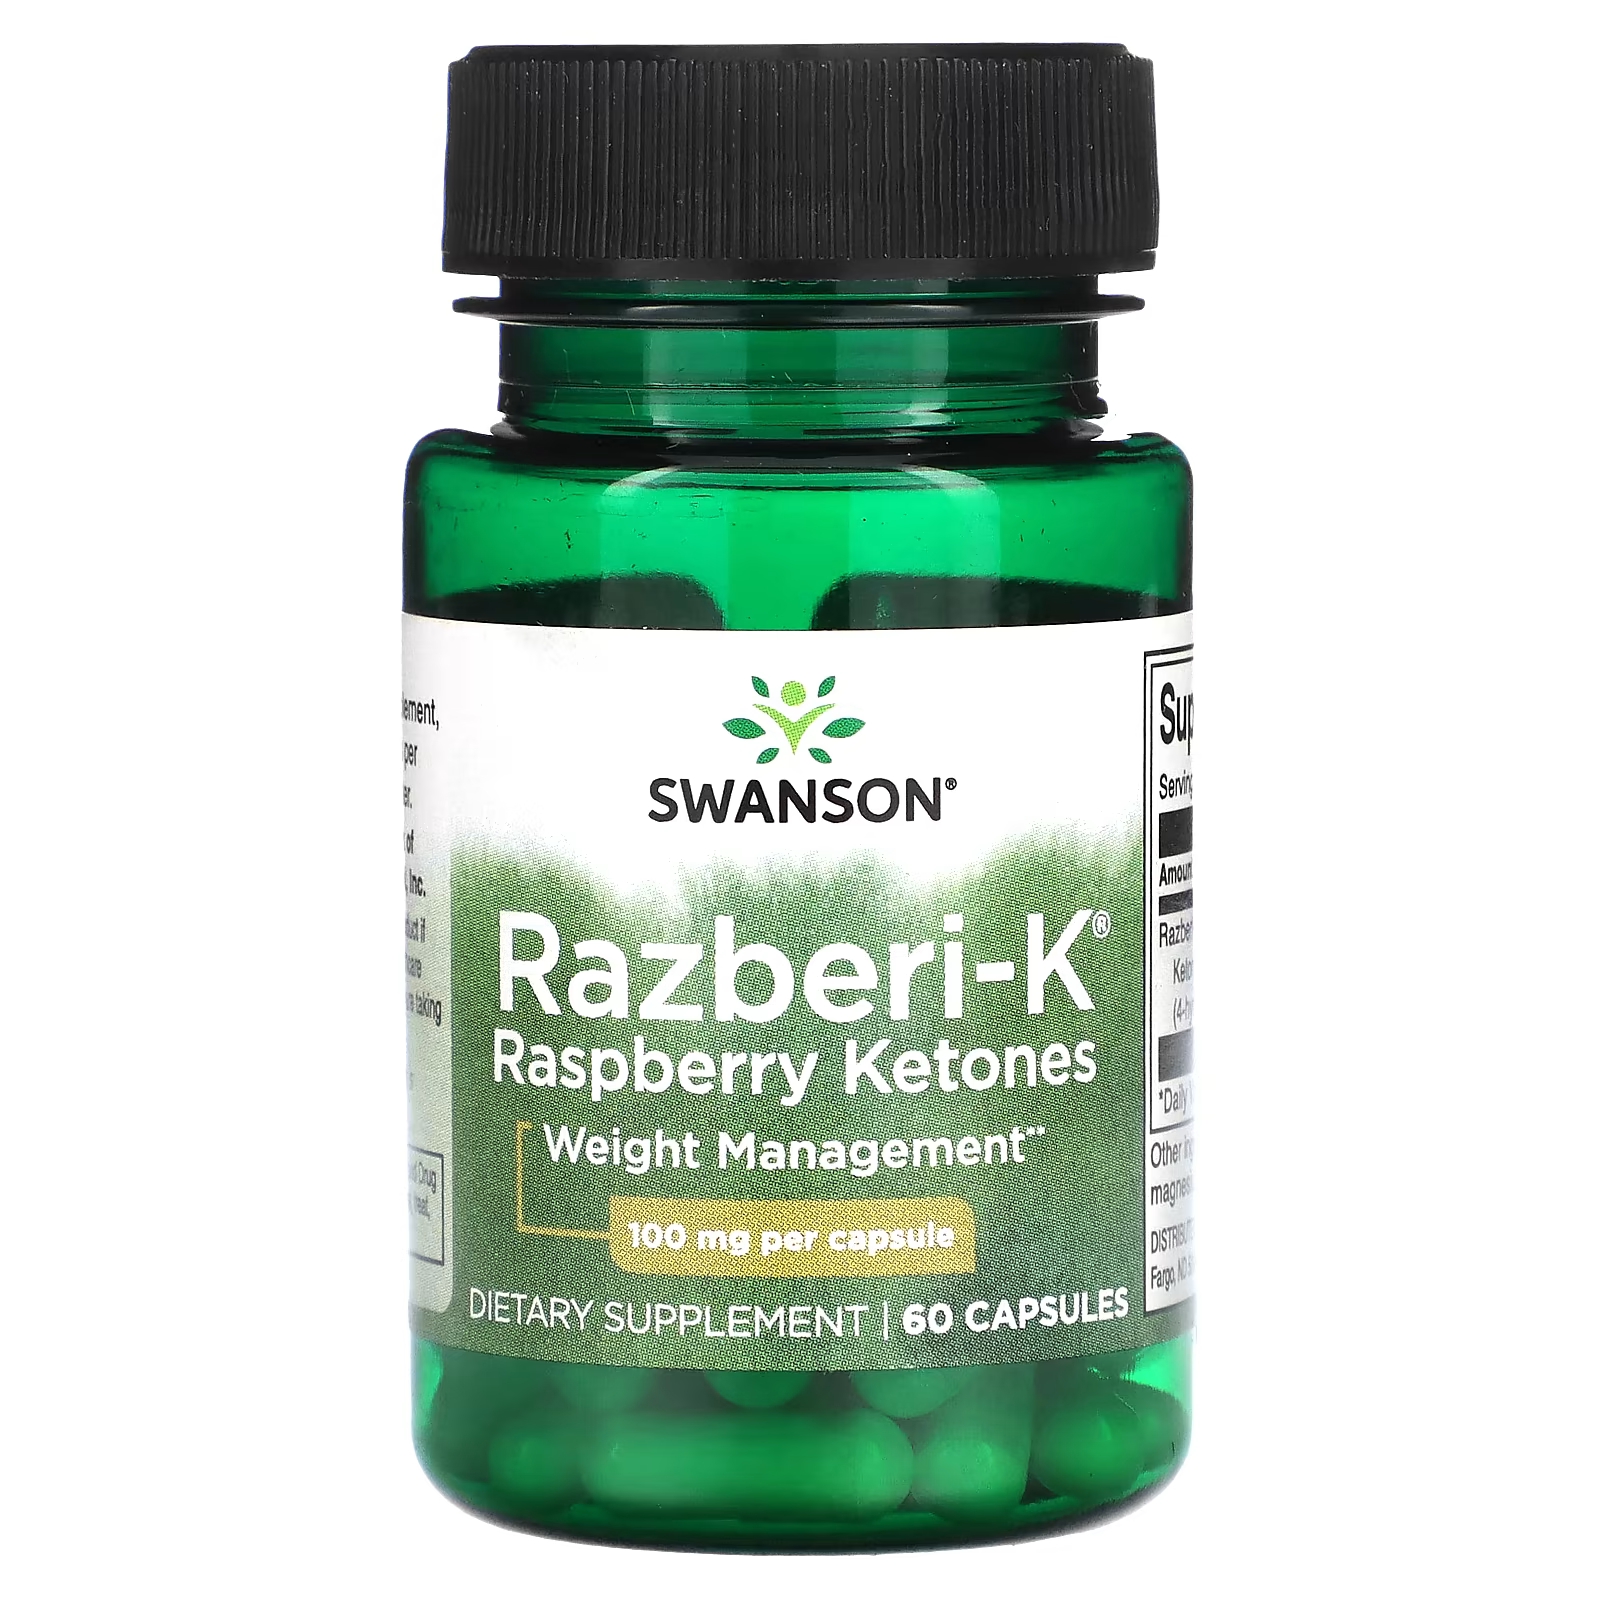 Кетоны малиновые Swanson Razberi-K 100 мг, 60 капсул swanson razberi k двойной силы малиновые кетоны 200 мг 60 растительных капсул